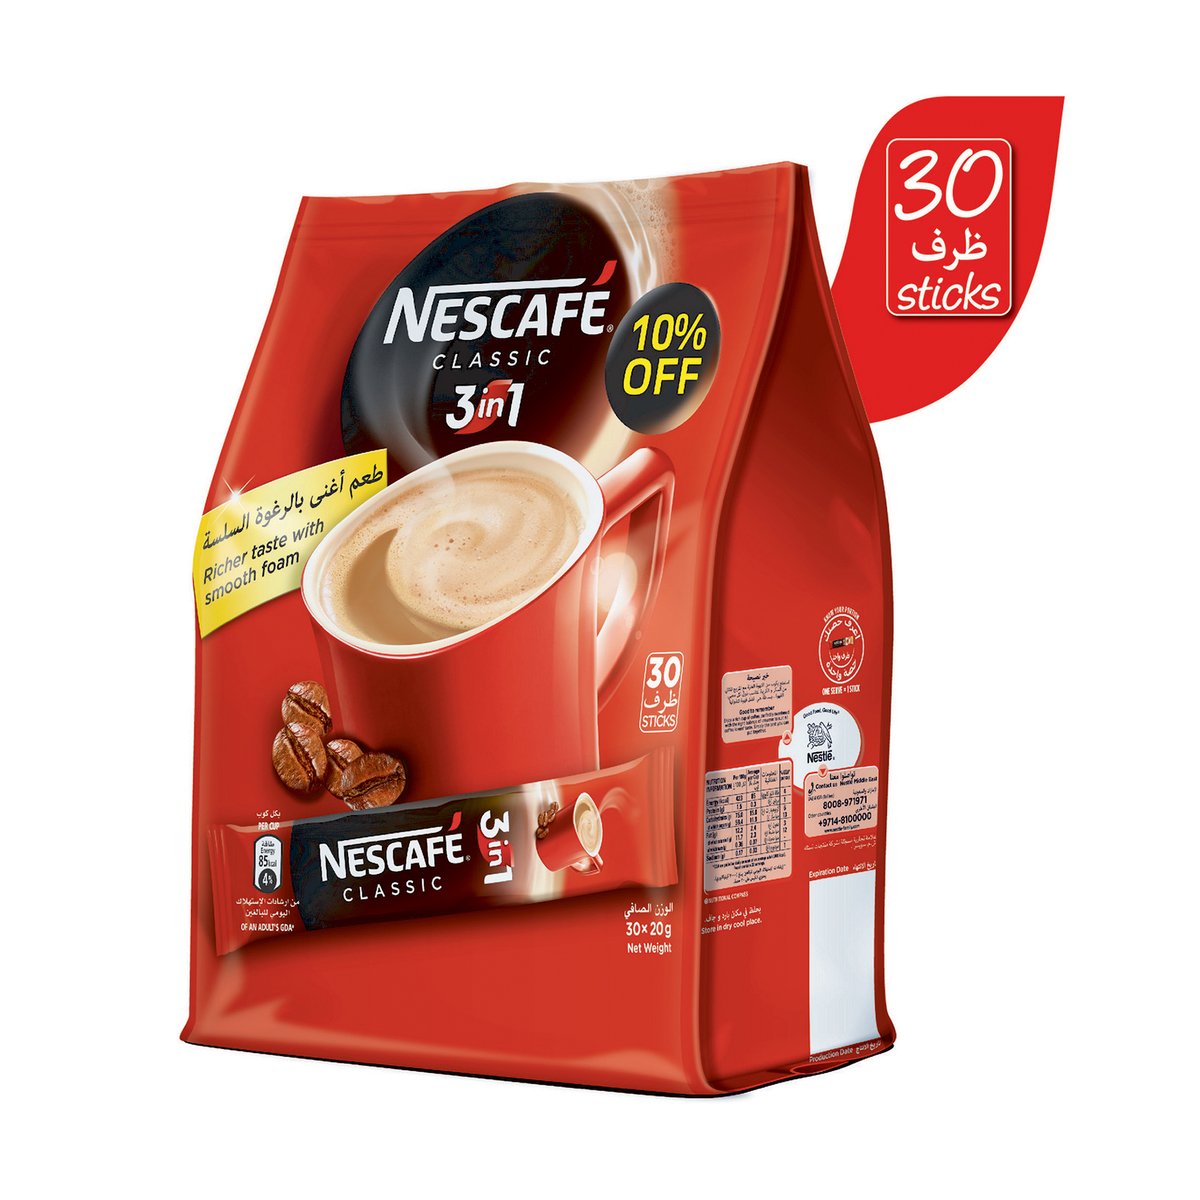 Nescafe Classic 3in1 Instant Coffee 30 x 20g